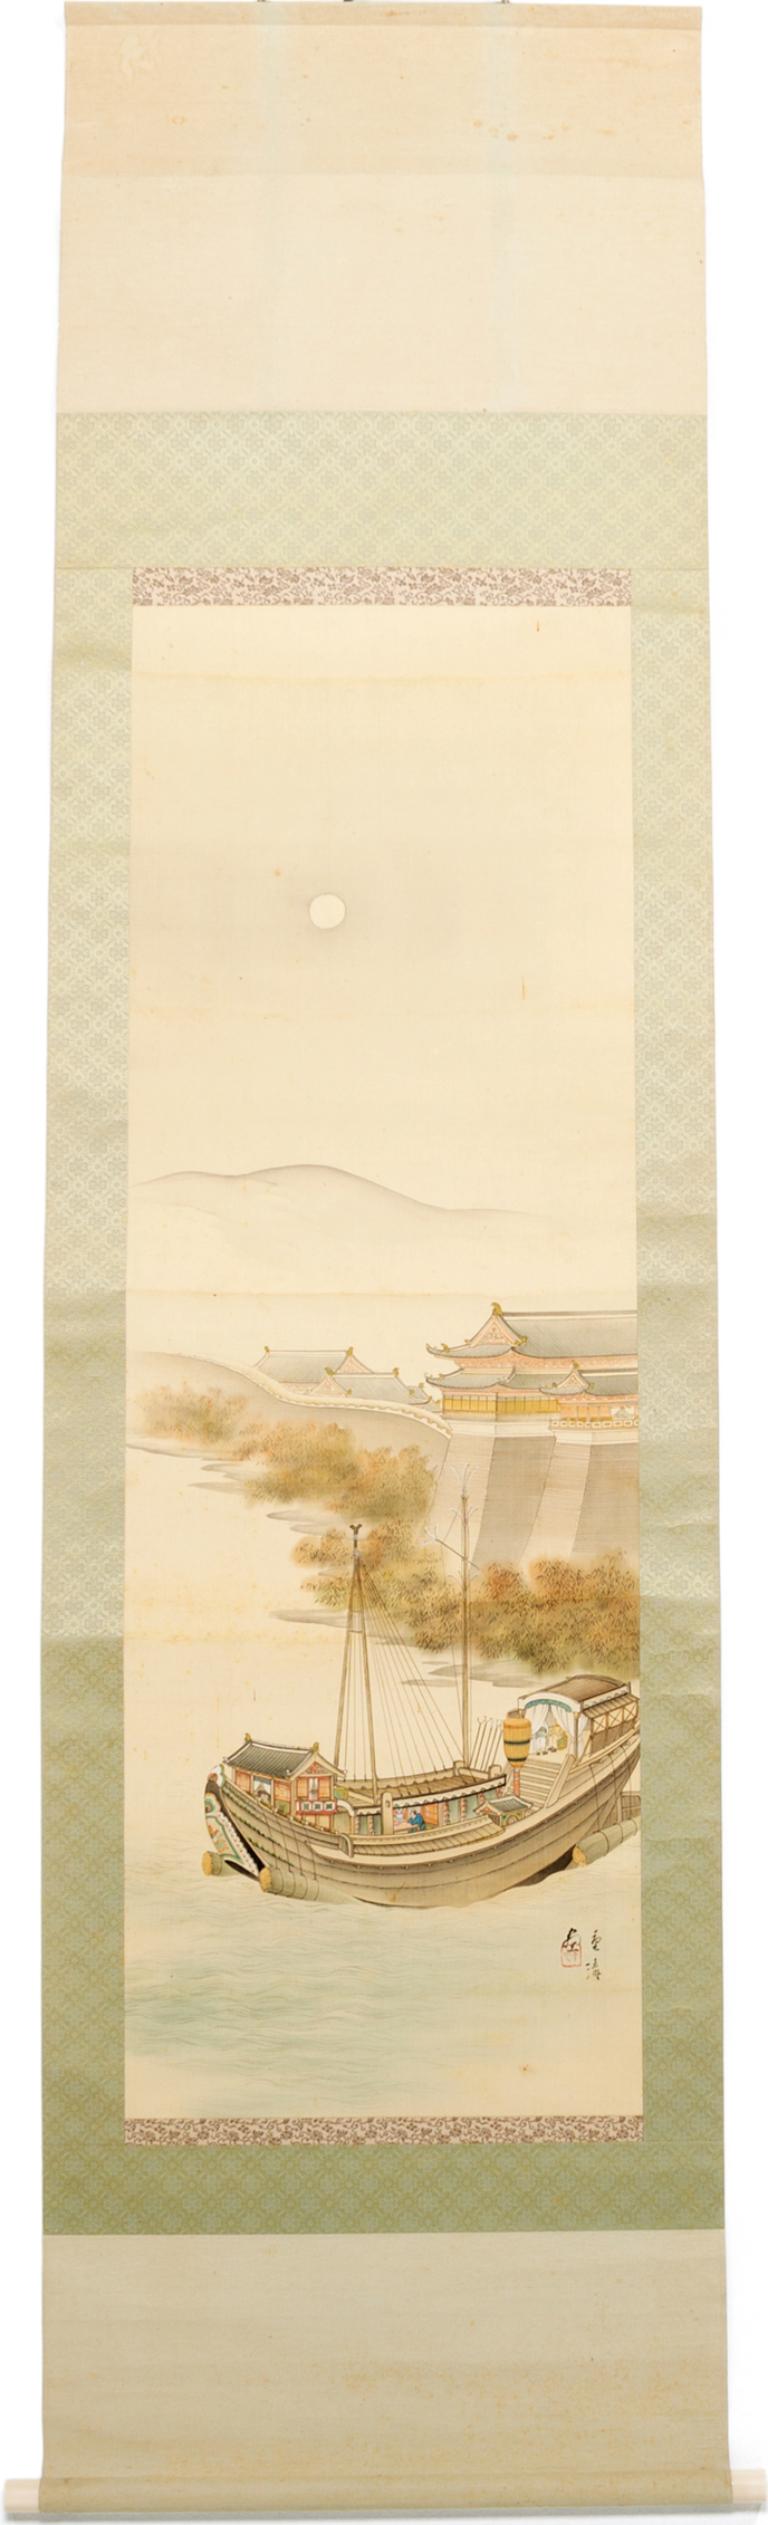 Unknown Landscape Art - Japanese Riverside Landscape Scroll, c. 1900